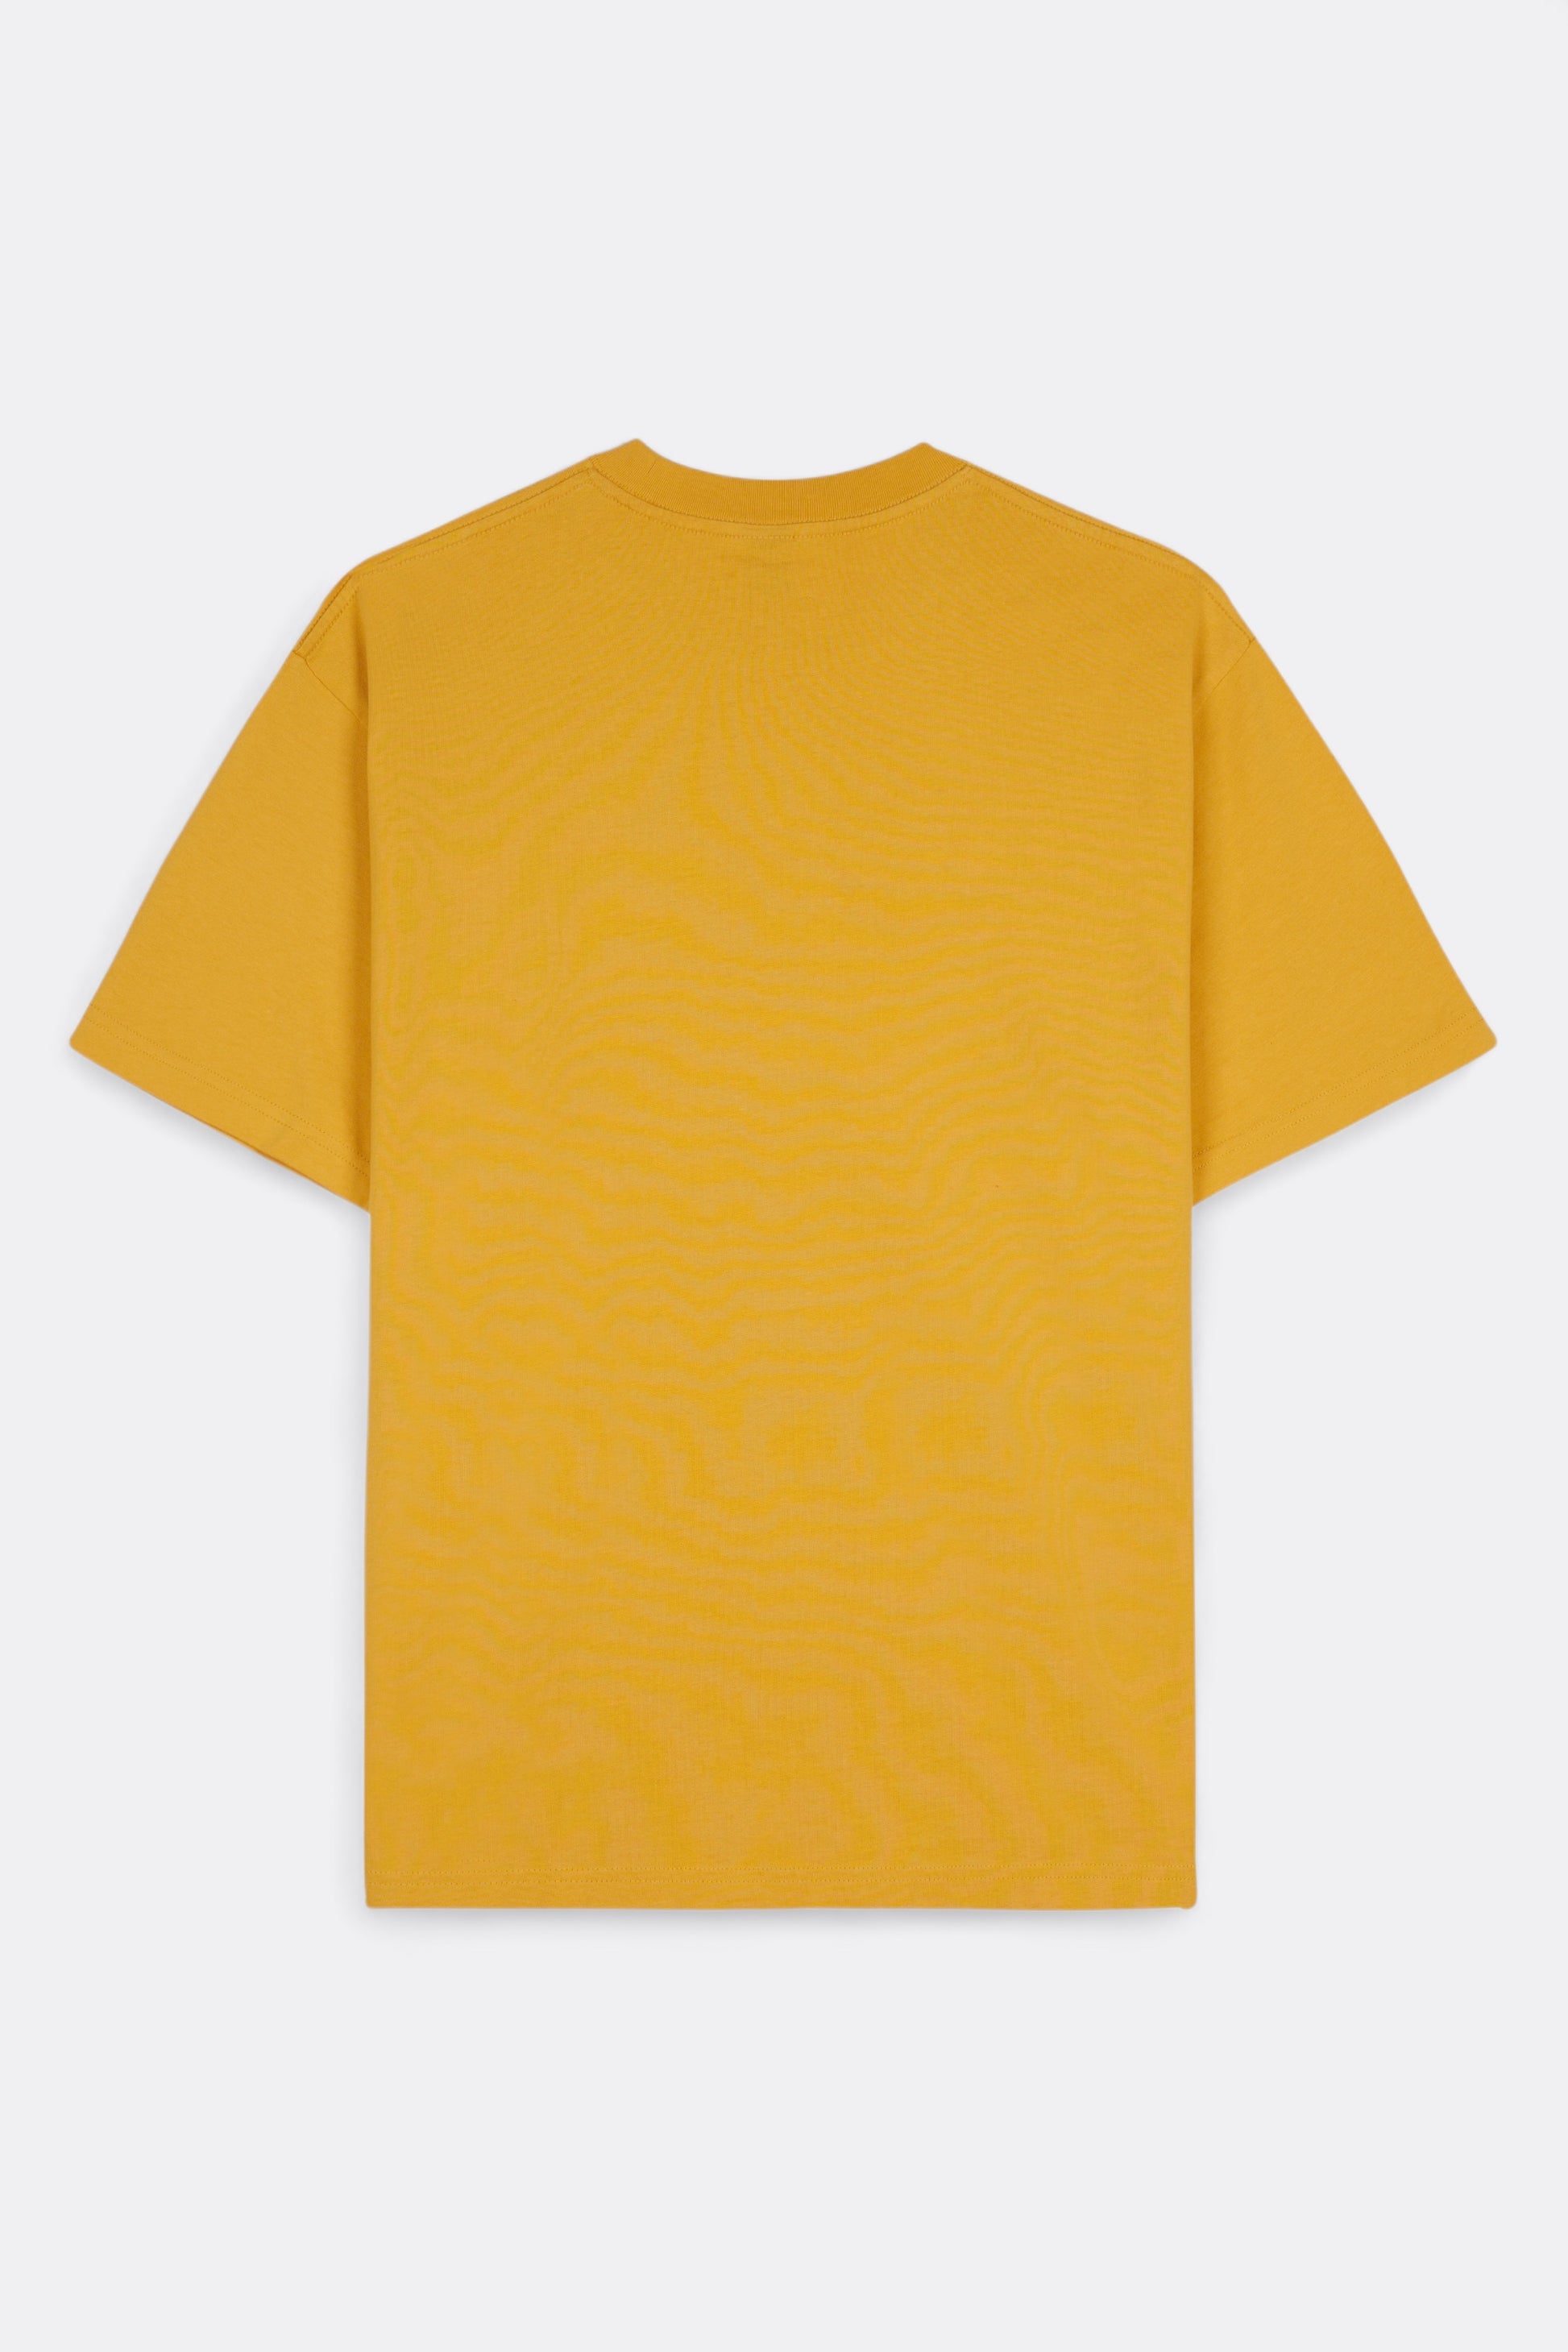 Brain Dead - 4D Vision Totem T-Shirt (Sand)